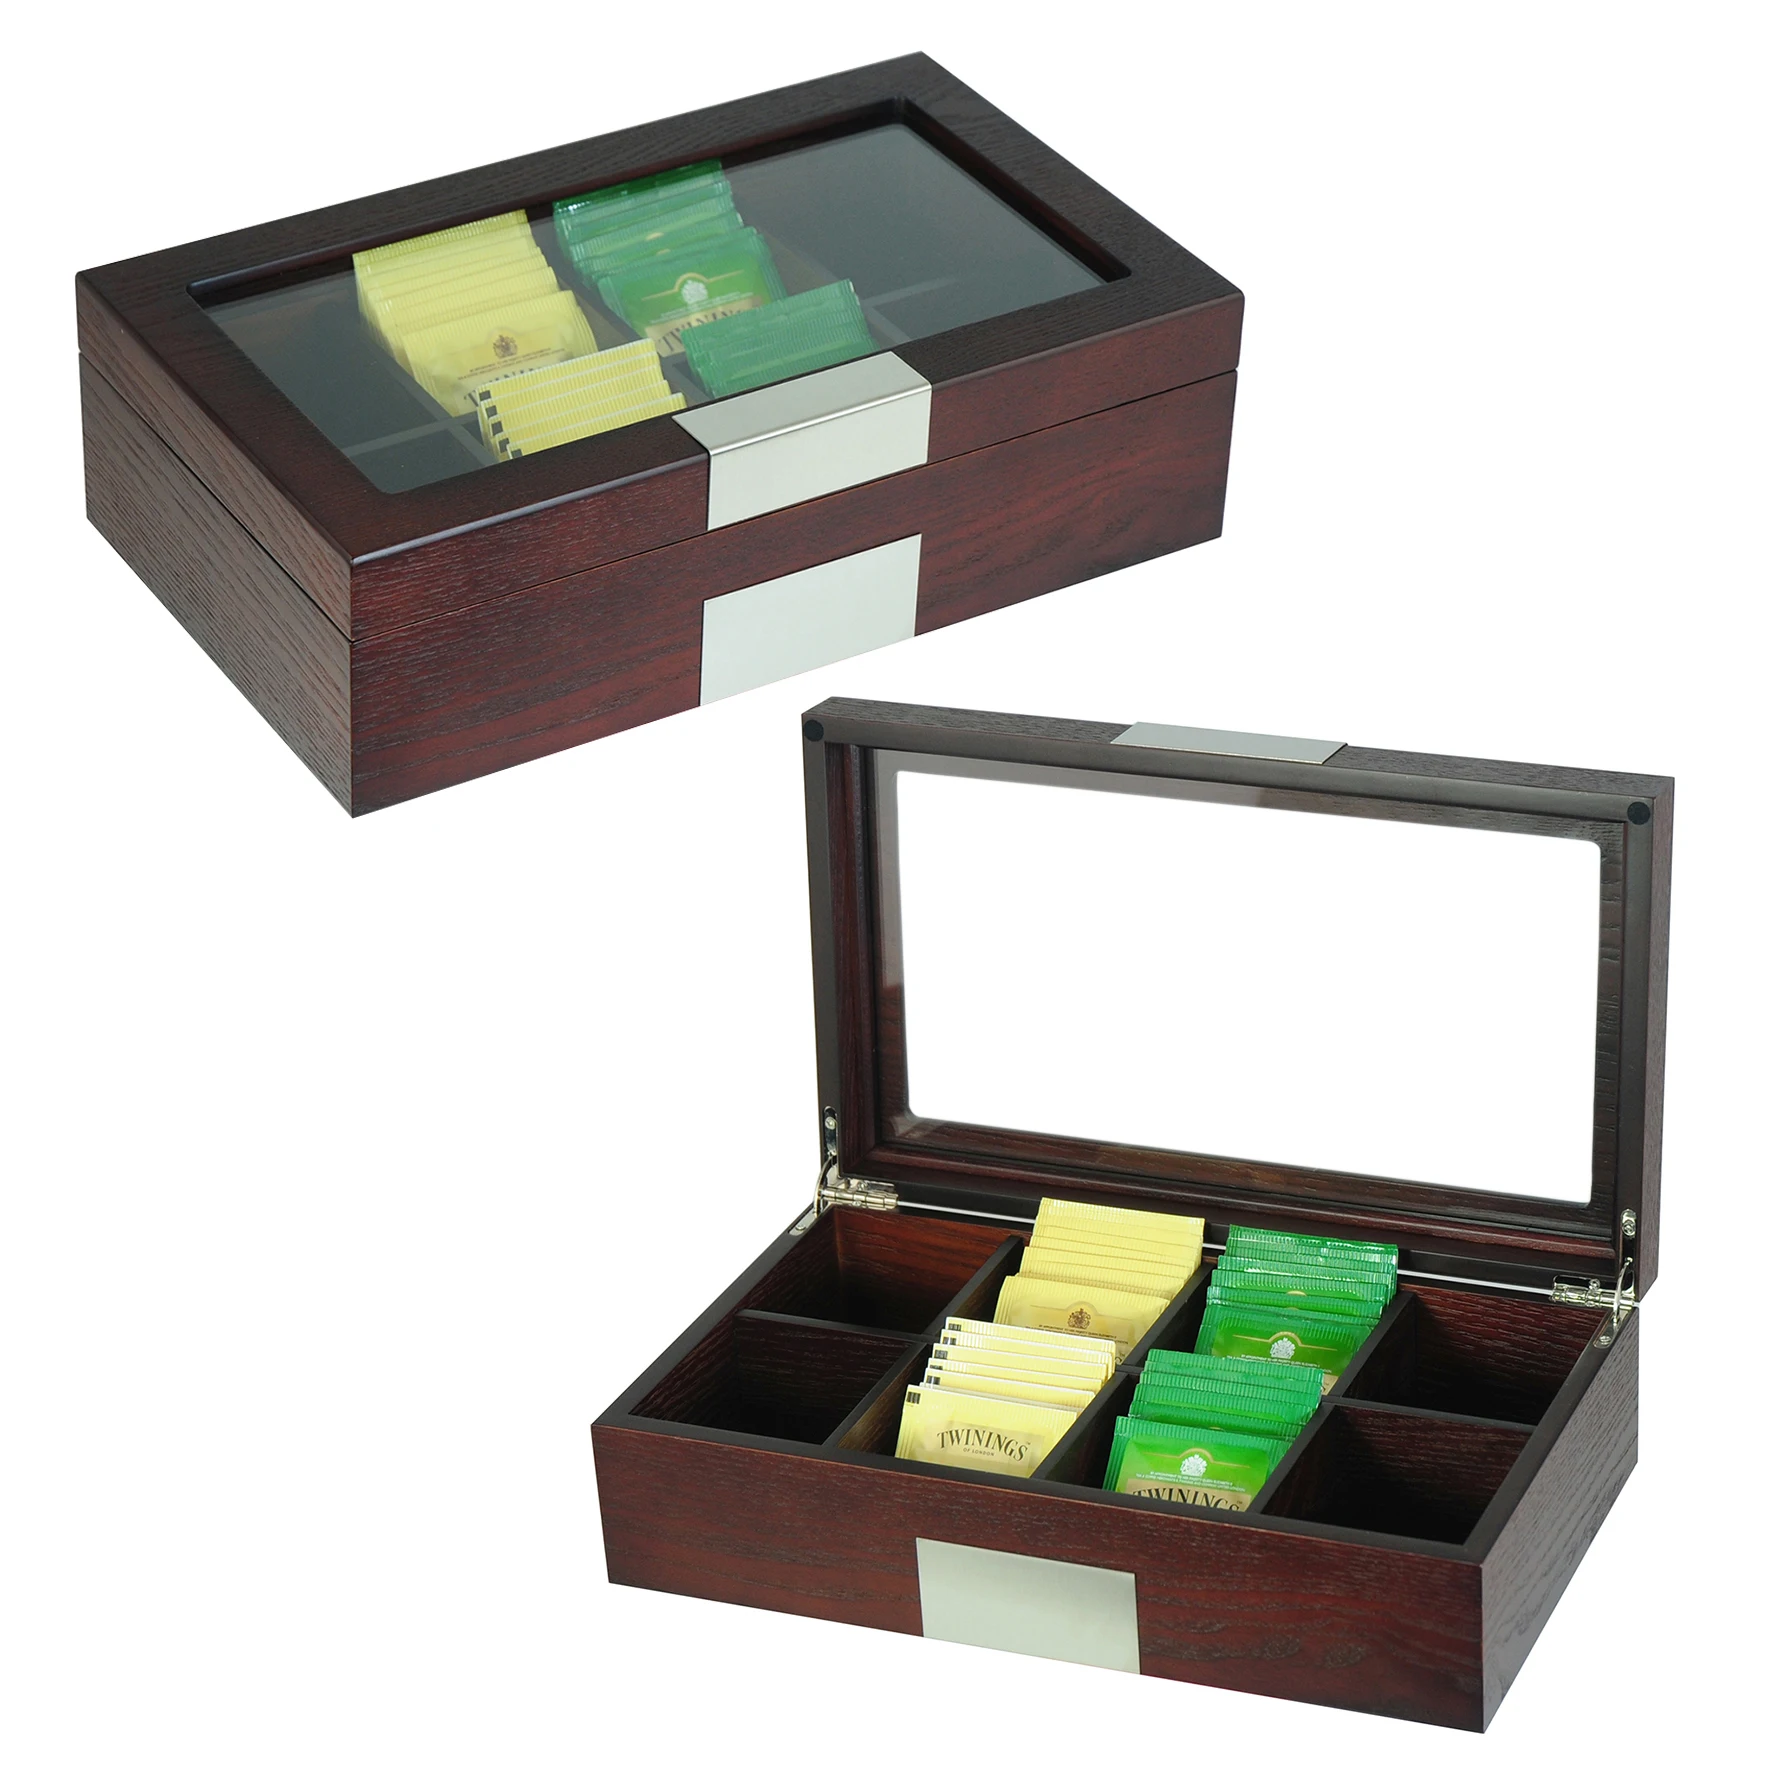 
Sonny Wooden Tea Box 8 Compartments Cherry OAK Grain Veneer Tea Organizer Sample Order Acceptable  (62318666997)